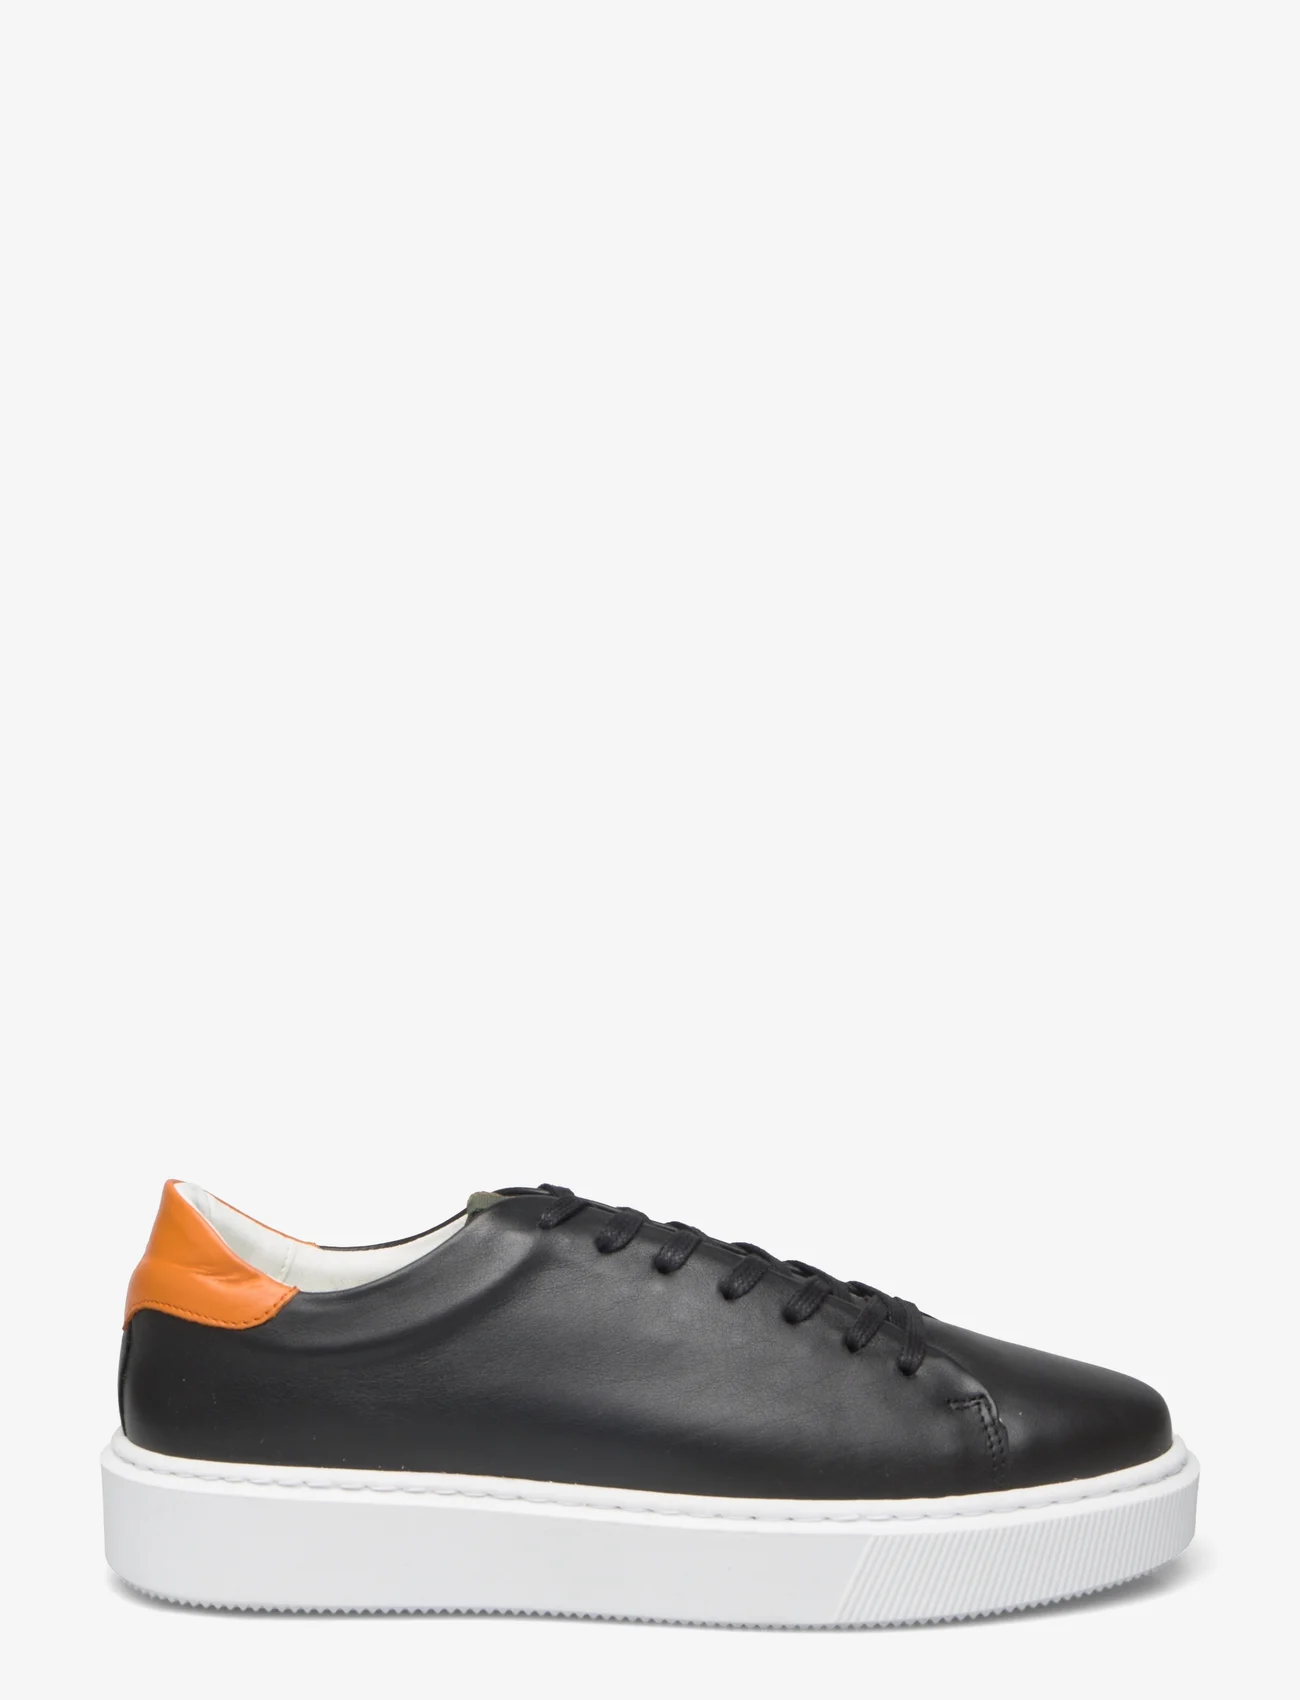 Playboy Footwear - Alex 2.0 - lav ankel - black leather/orange - 1